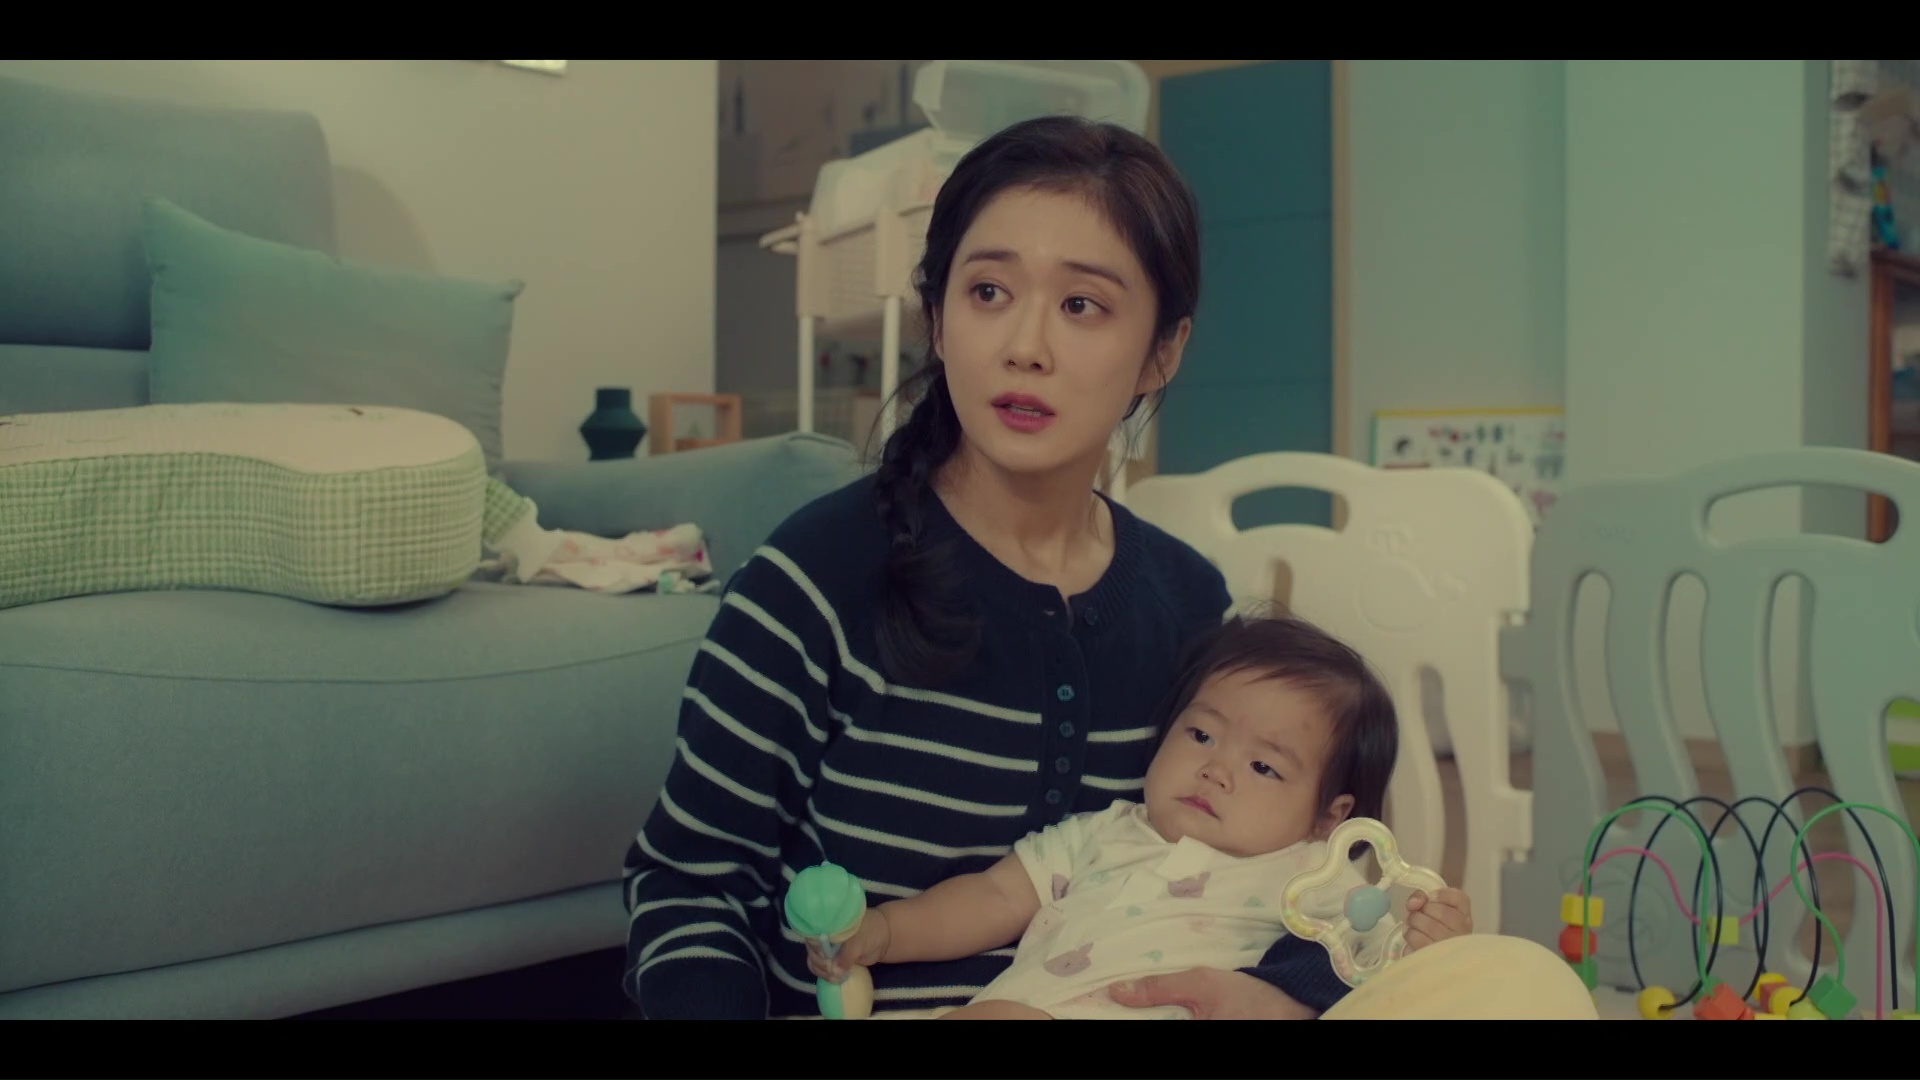 Jang Hyuk Jang Nara in Family: Episodes 1-2